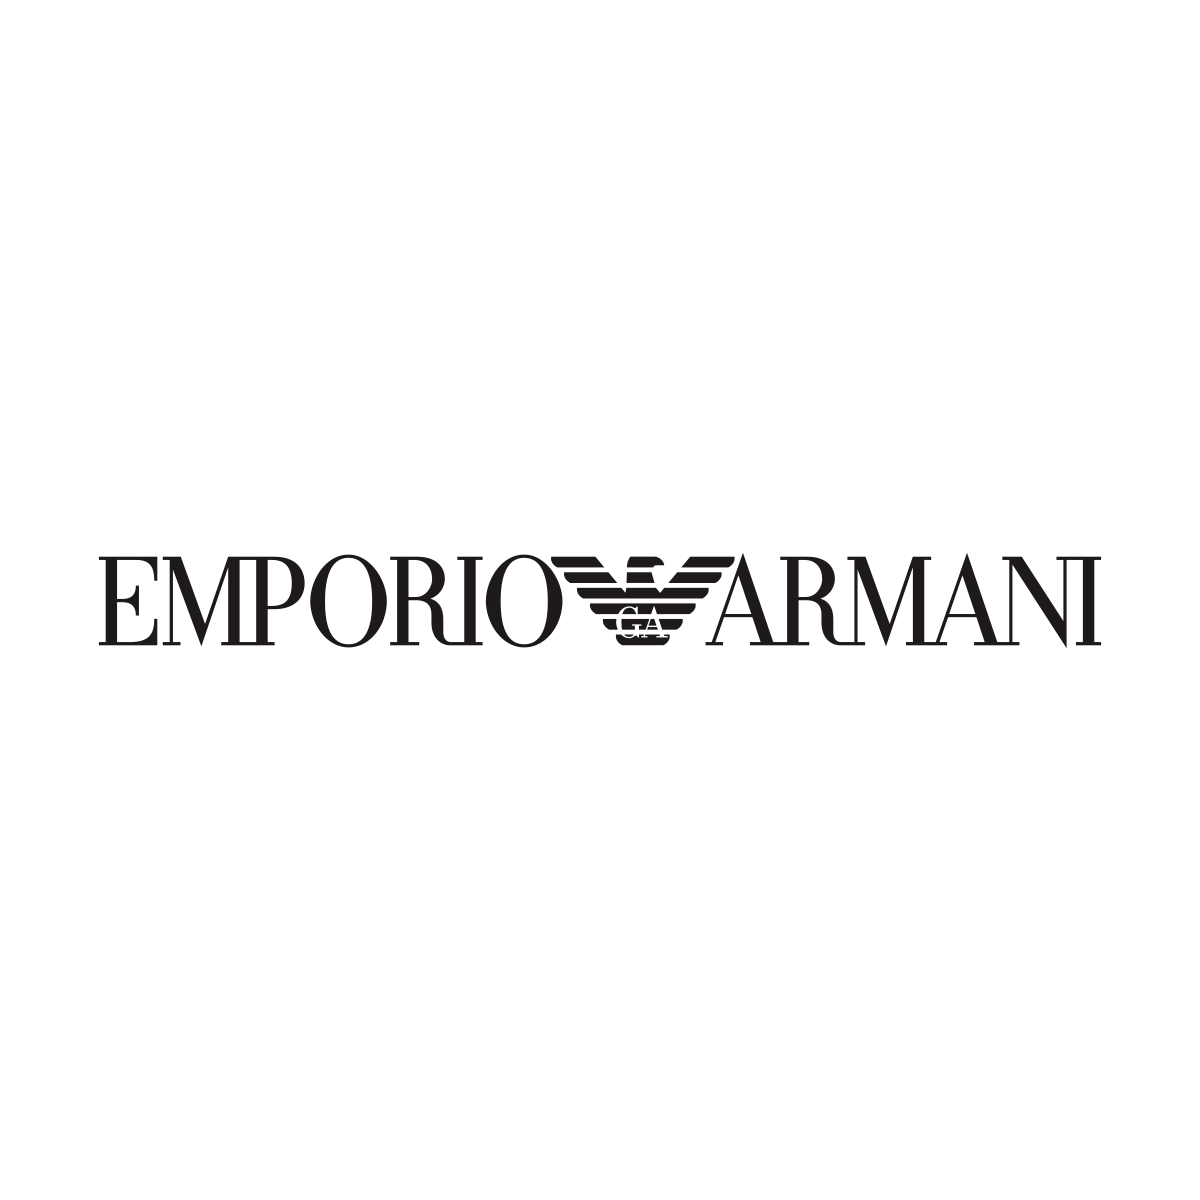 Emporio Armani - Men's Clothing Stores